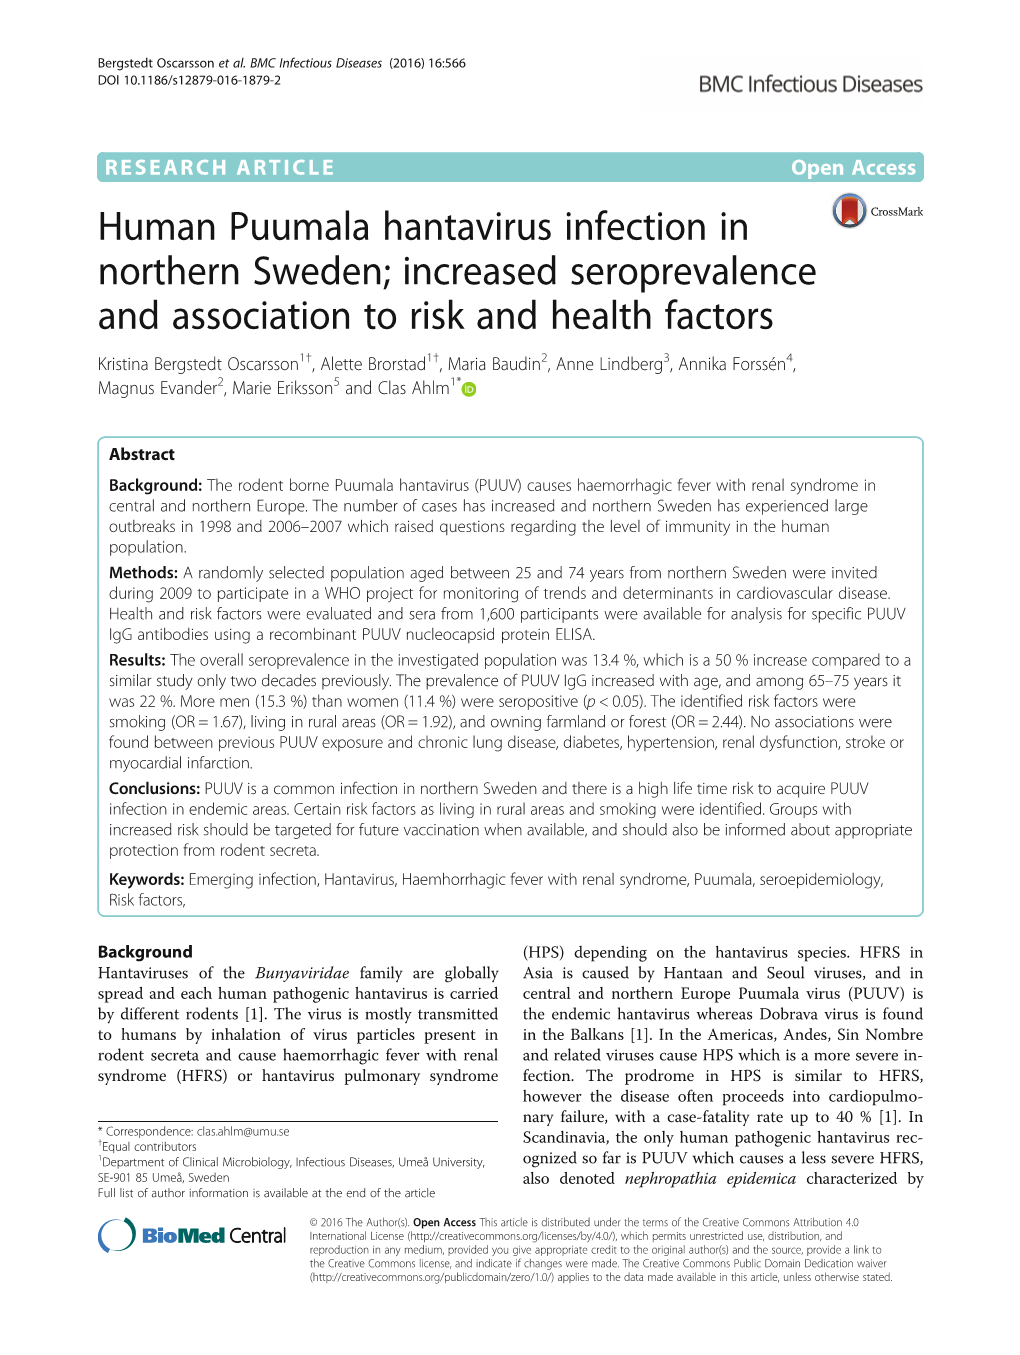 Human Puumala Hantavirus Infection in Northern Sweden